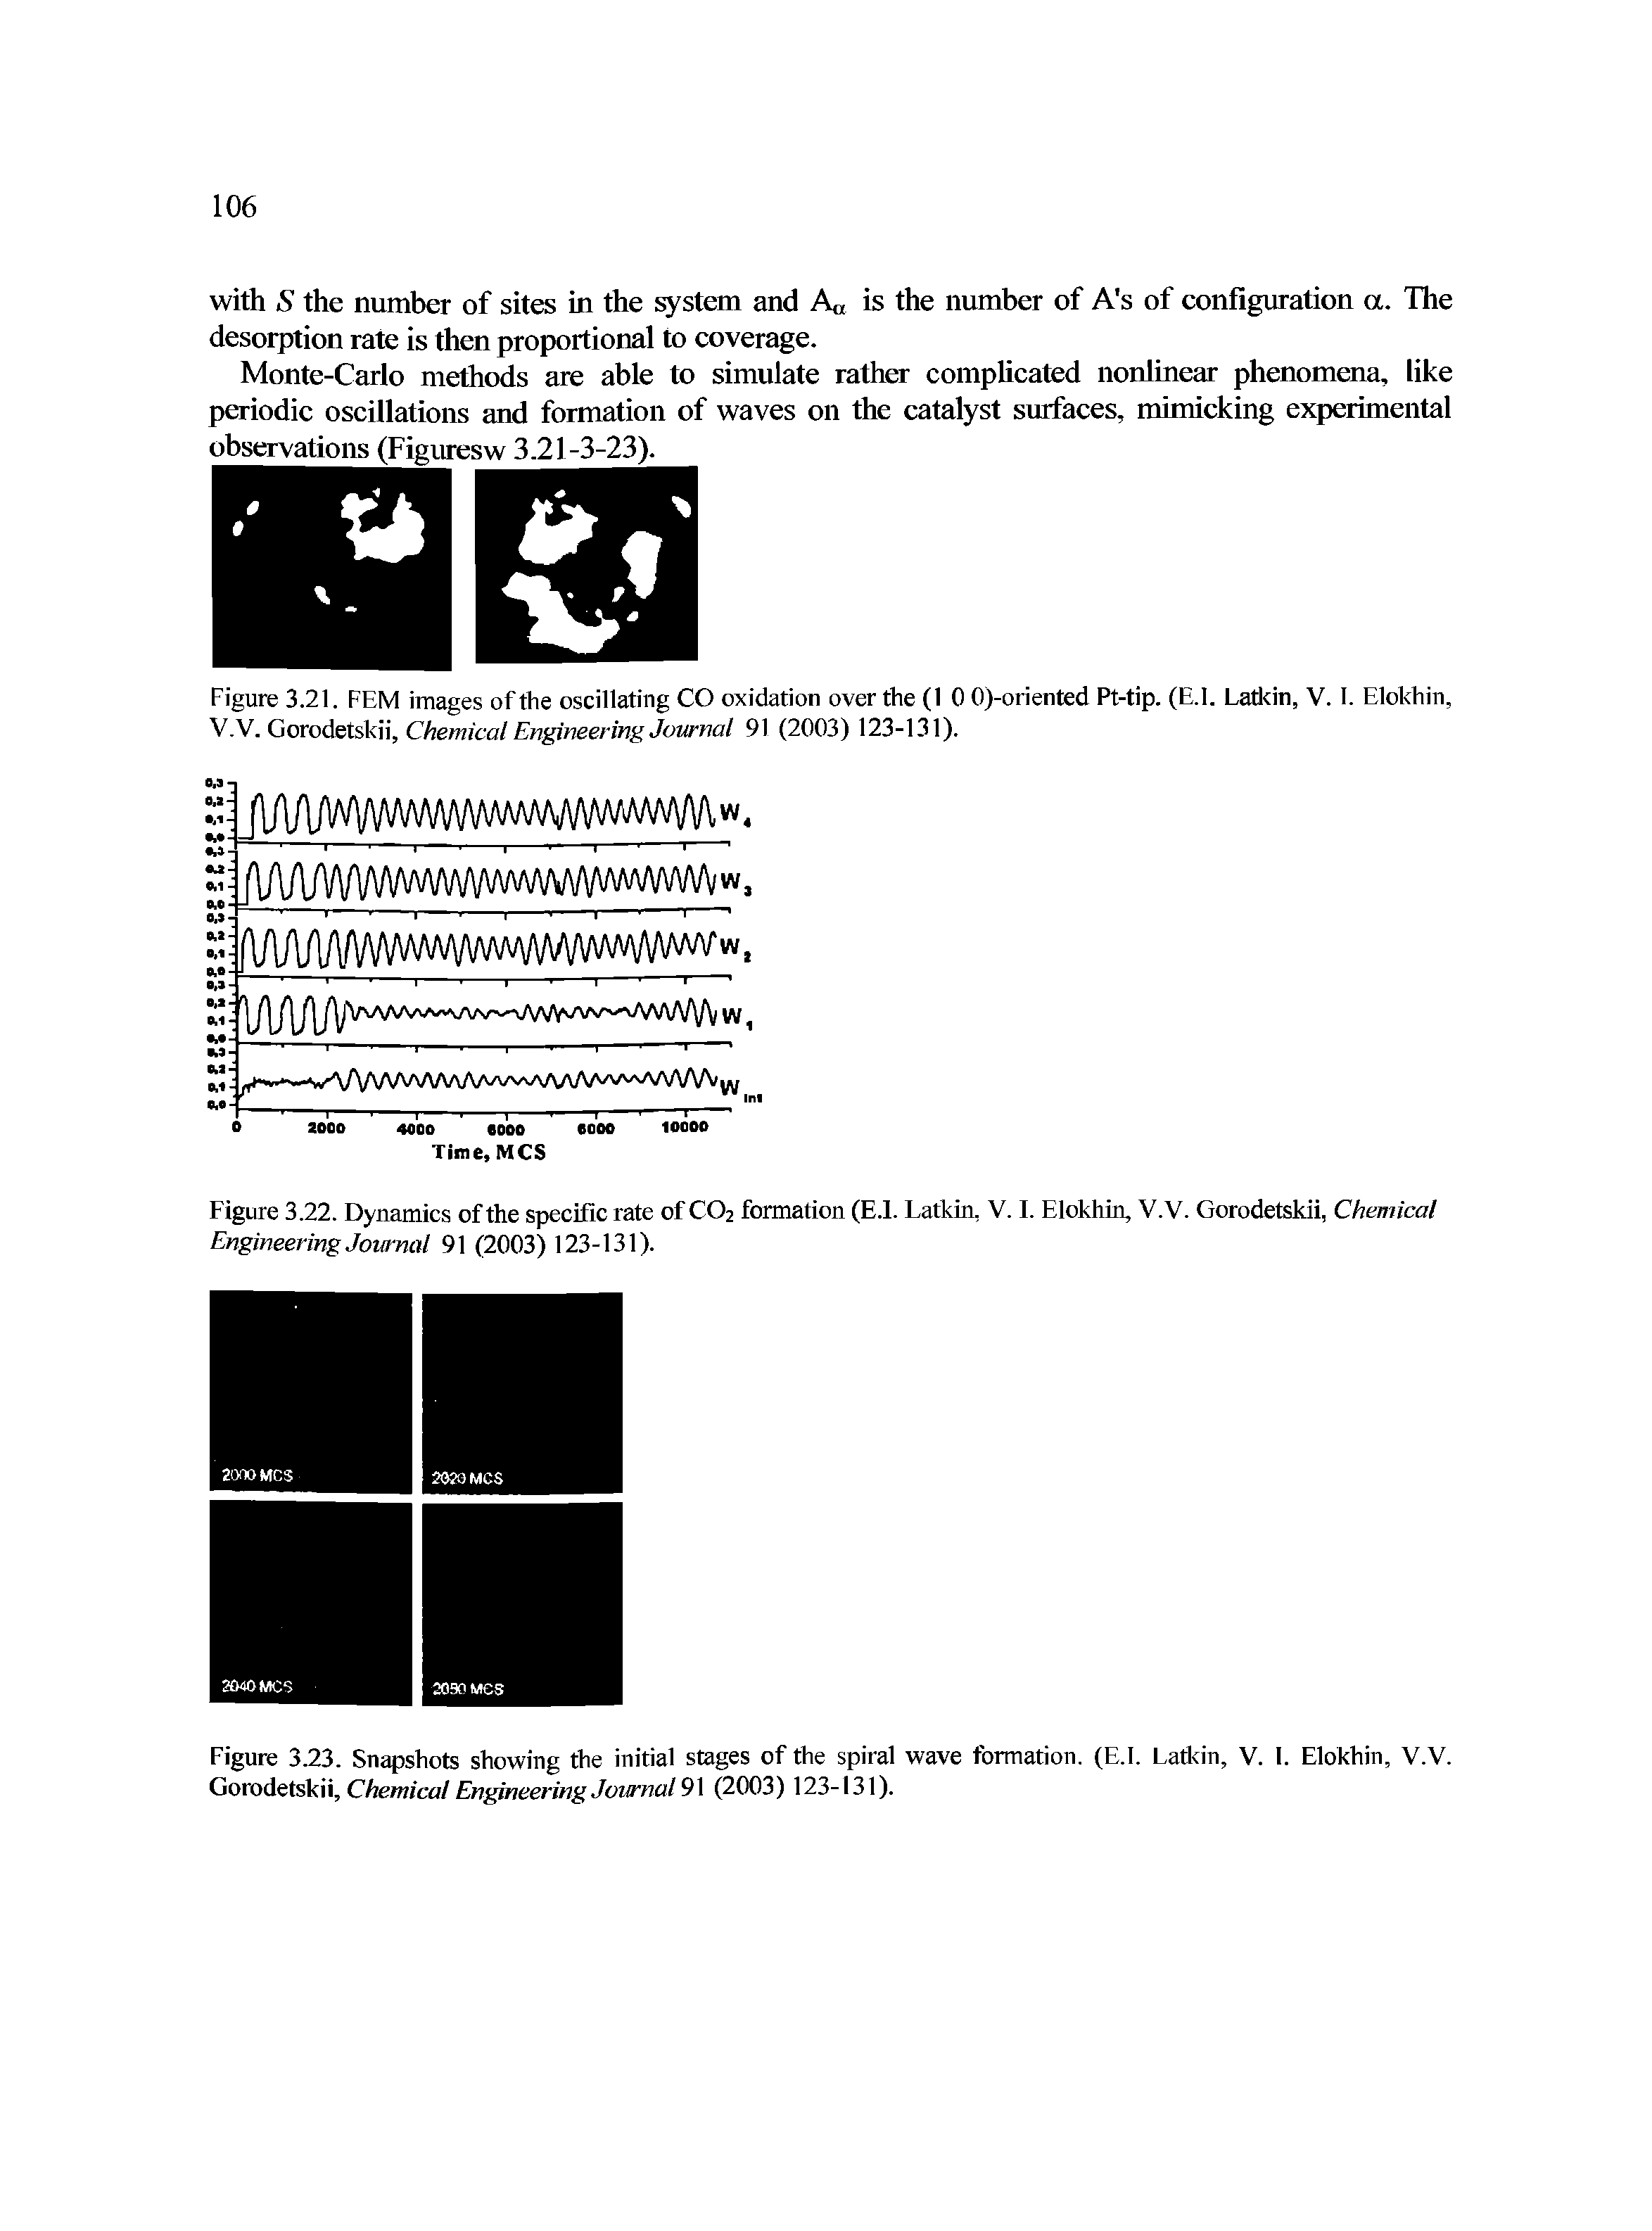 Figure 3.23. Snapshots showing the initial stages of the spiral wave formation. (E.I. Latkin, V. 1. Elokhin, V.V. Gorodetskii, Chemical Engineering Journal 91 (2003) 123-131).